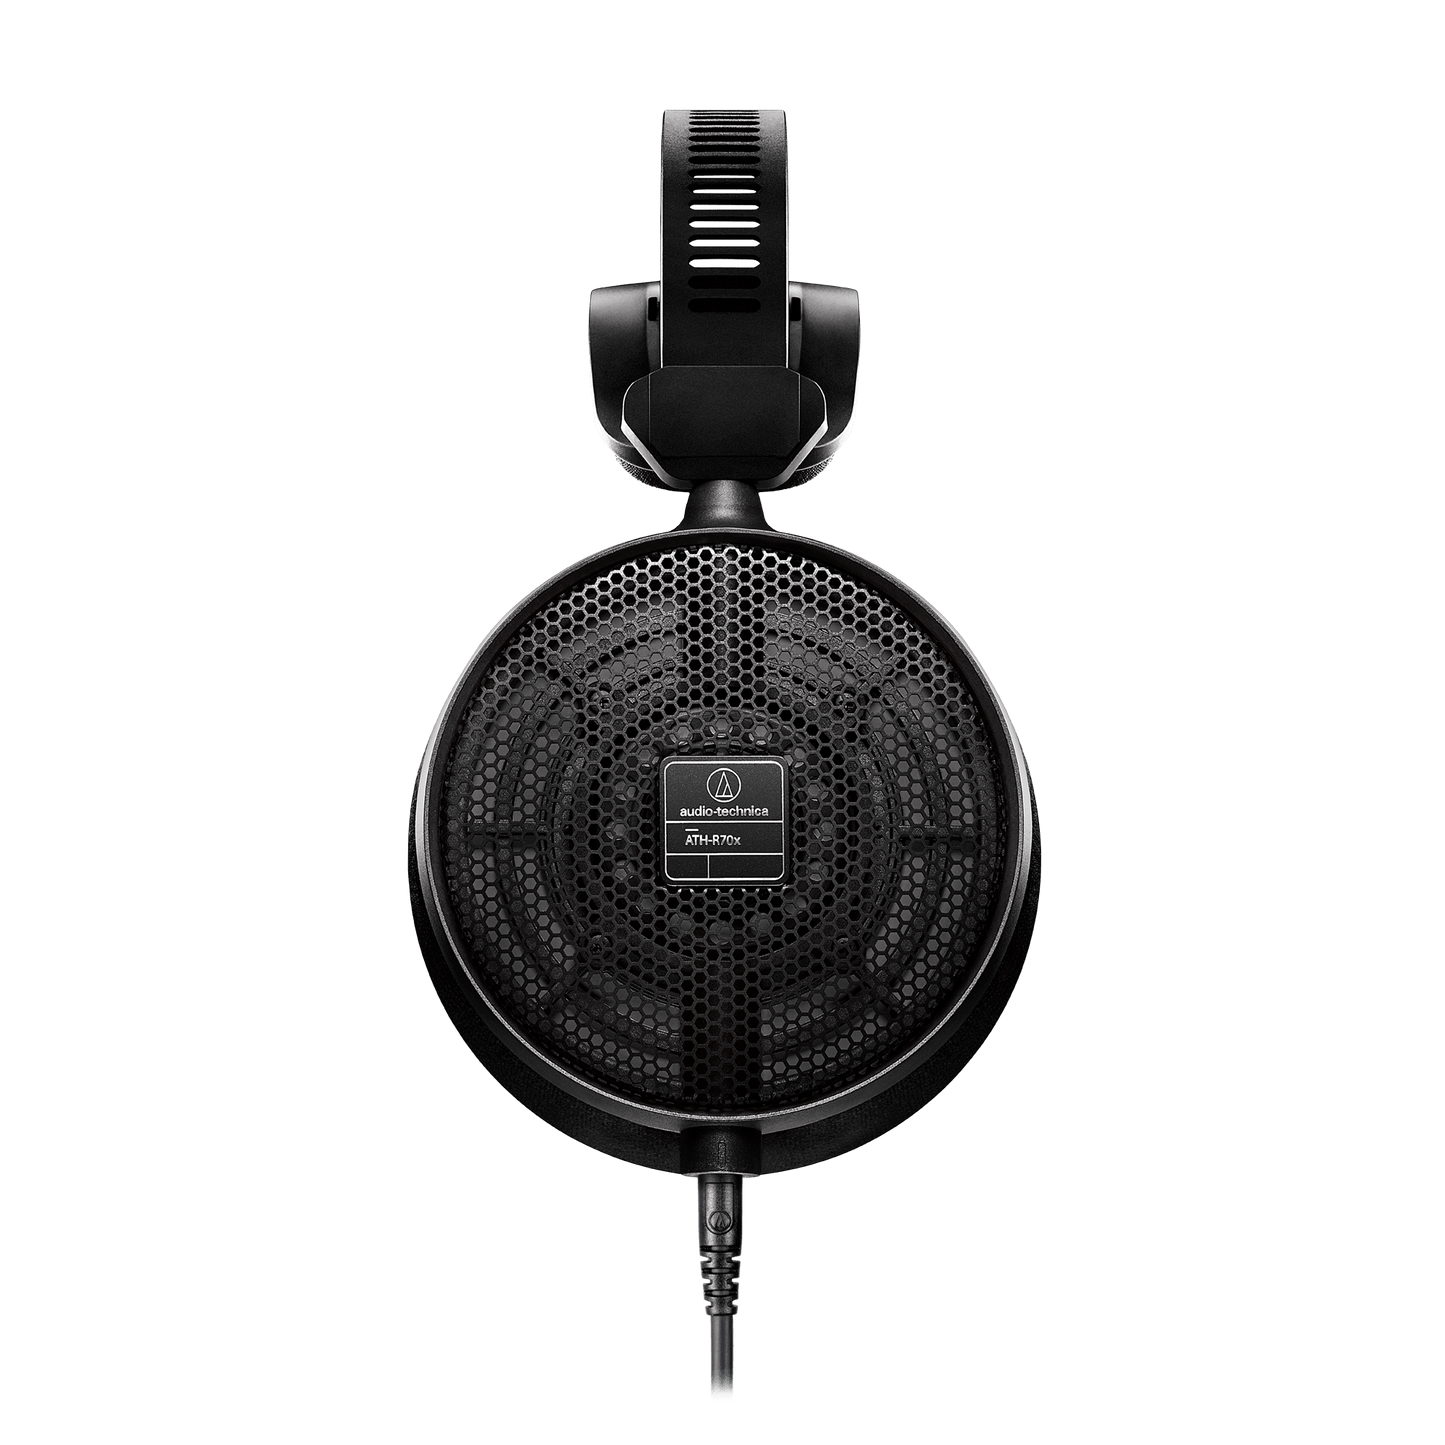 Audio Technica ATH-R70x Open-back Studio Reference Headphones